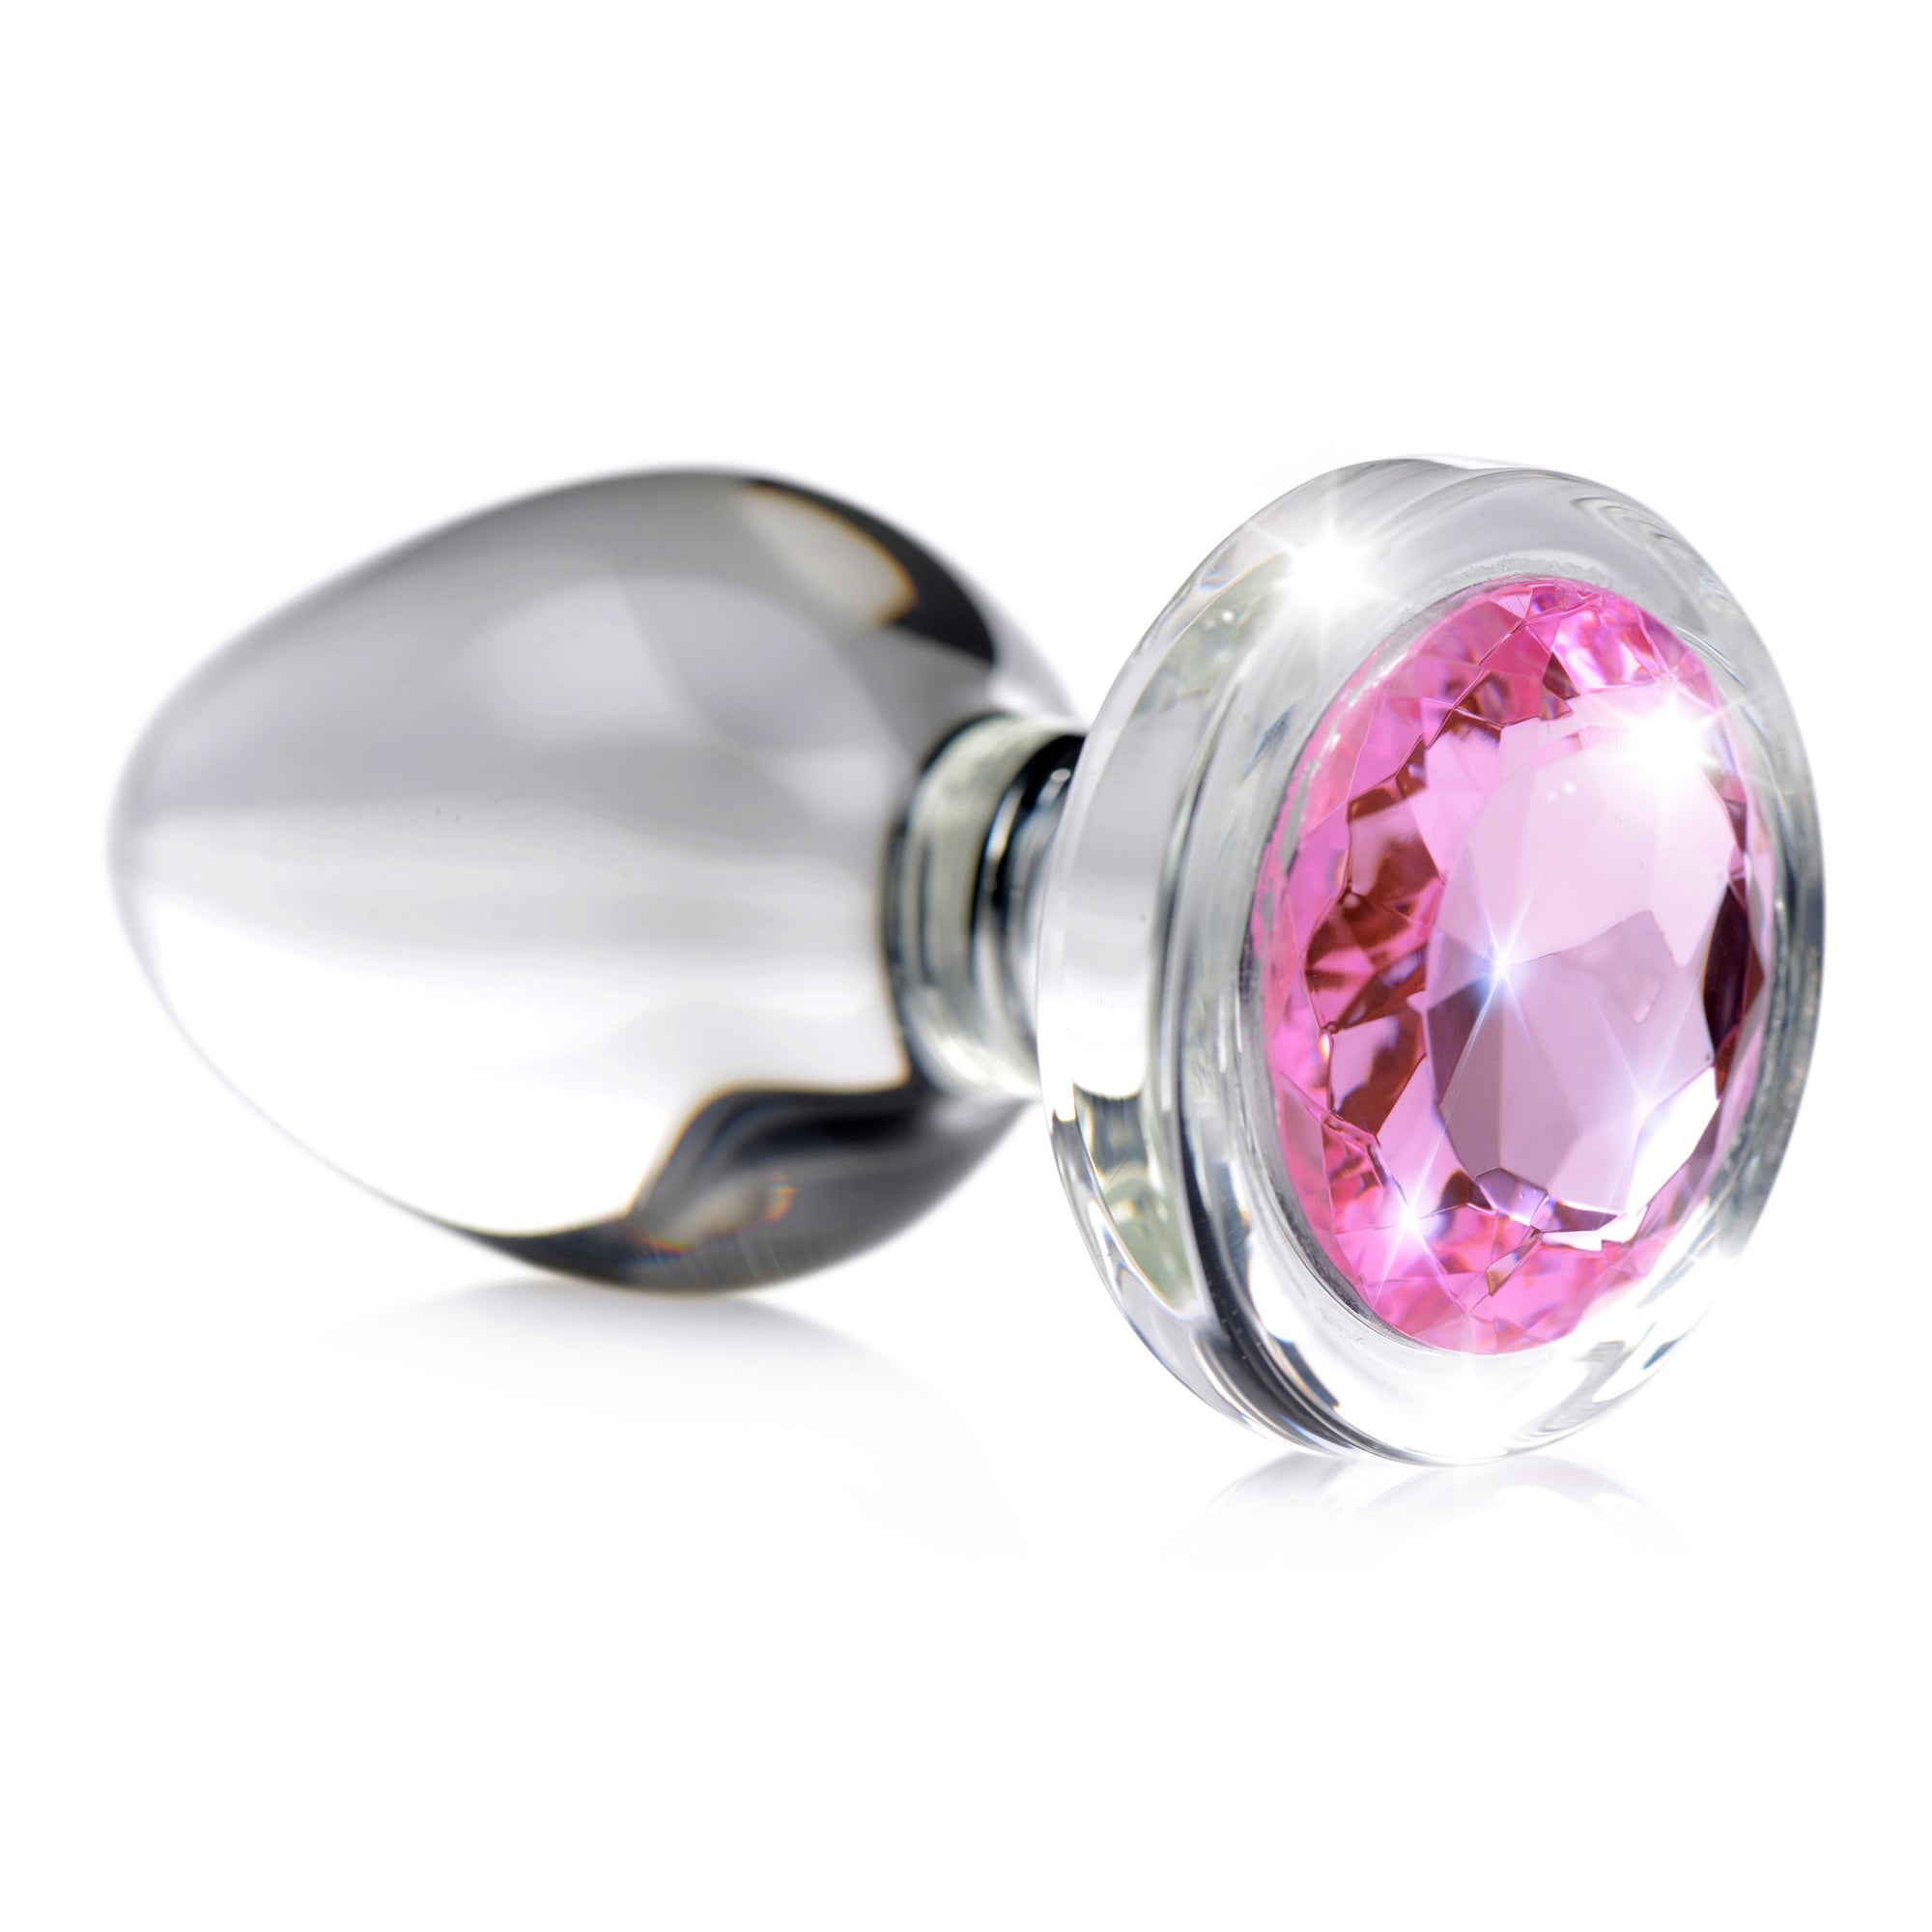 Pink Gem Glass Anal Plug - Small 
Anal Toys
Booty Sparks Cupid’s Secret Stash